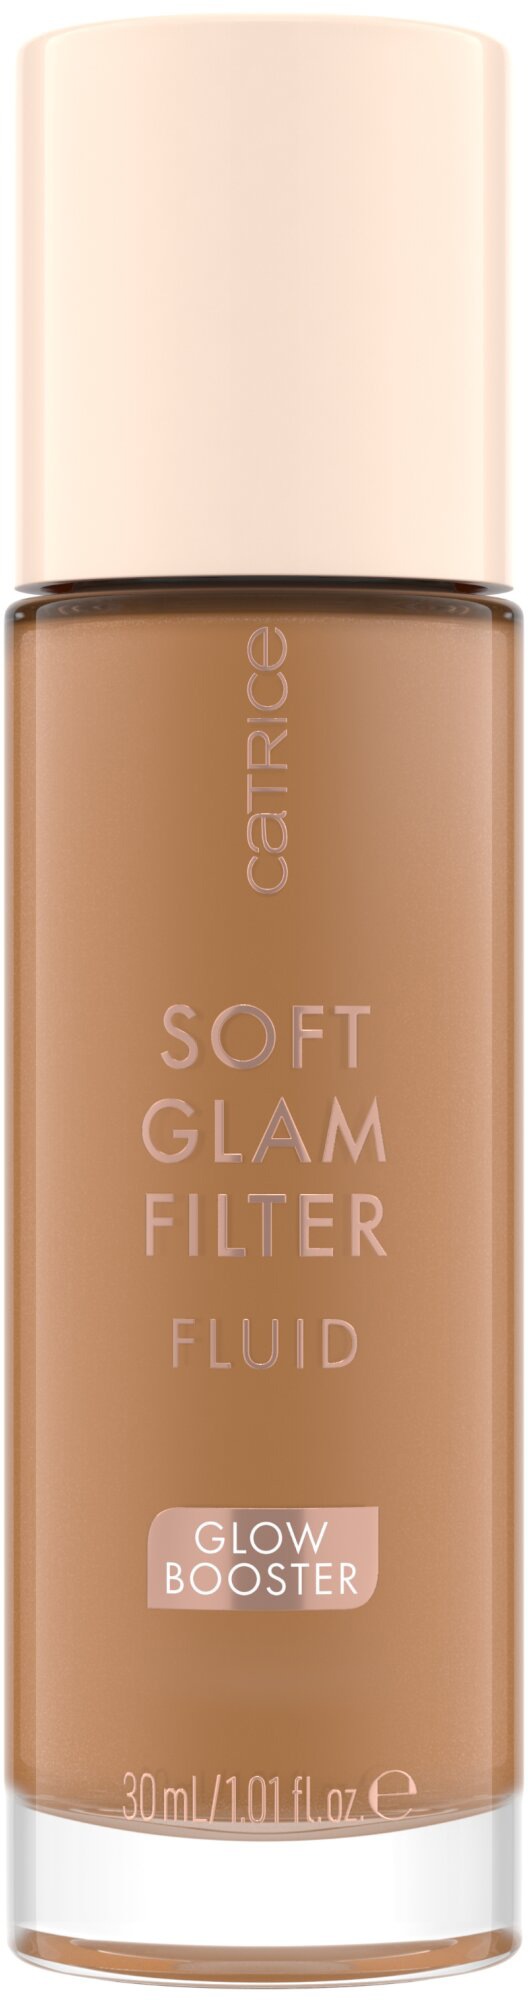 Fluid«, »Soft Filter Primer UNIVERSAL Catrice bestellen (Set) Glam |